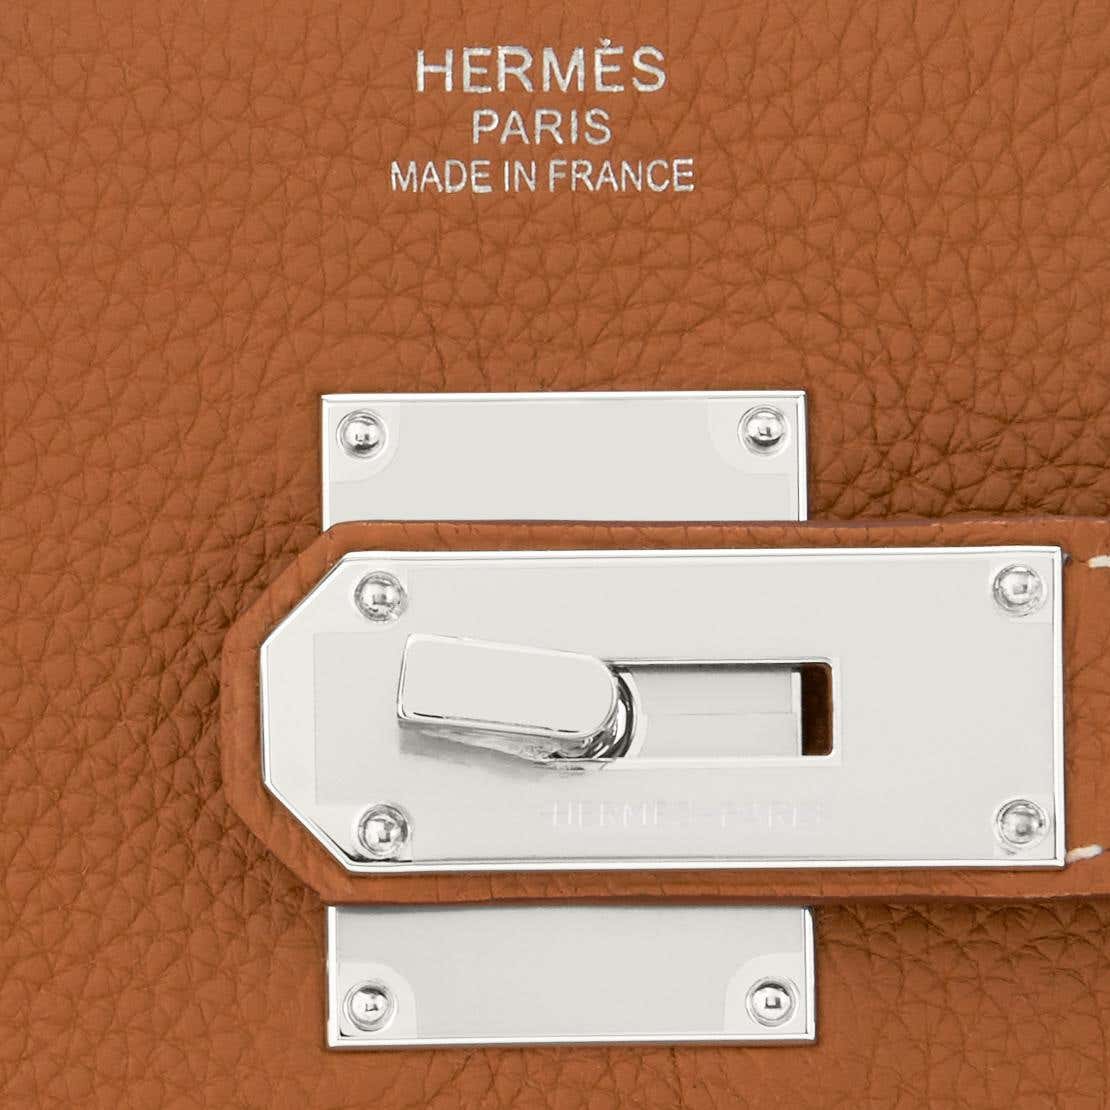 Hermès 2021 Embroidered Togo HAC Birkin 40 - Brown Totes, Bags